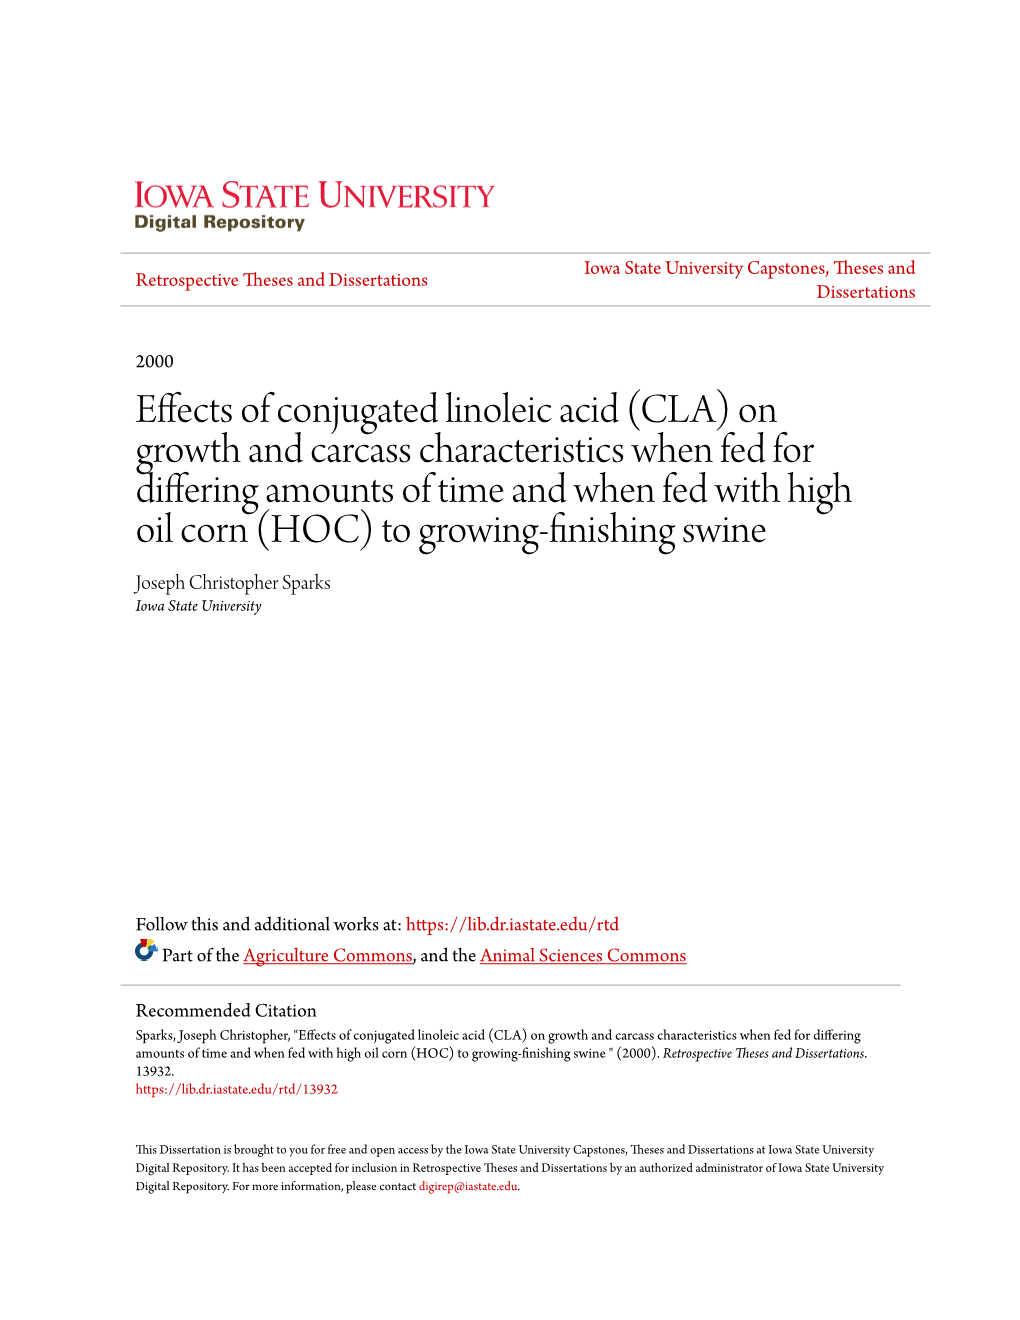 Effects of Conjugated Linoleic Acid (CLA)